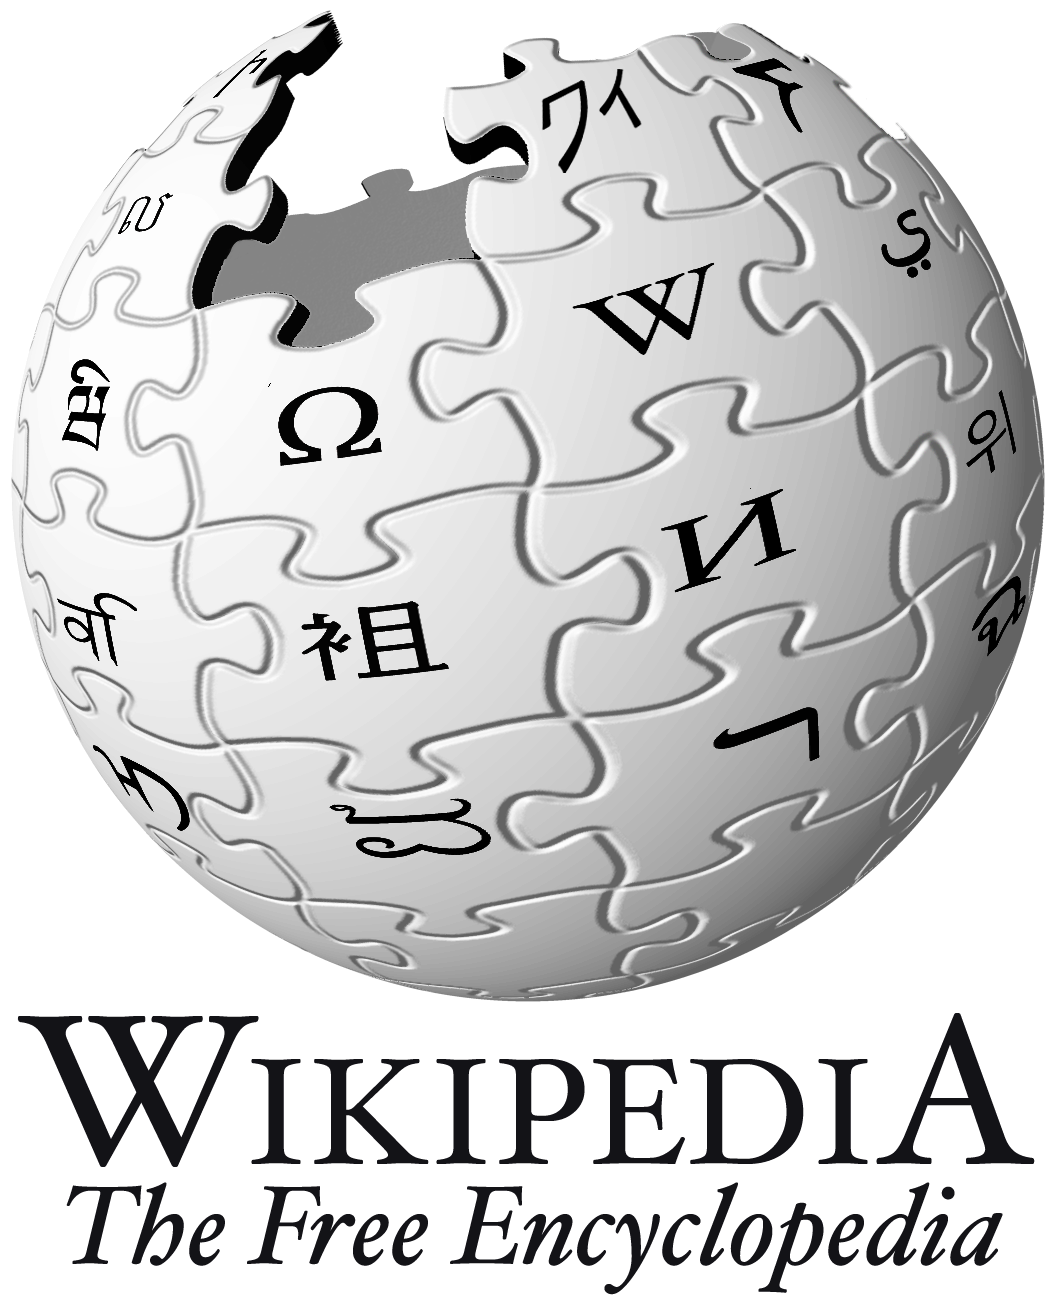 Scott The Woz and Wikipedia | Scott The Woz Wiki | Fandom